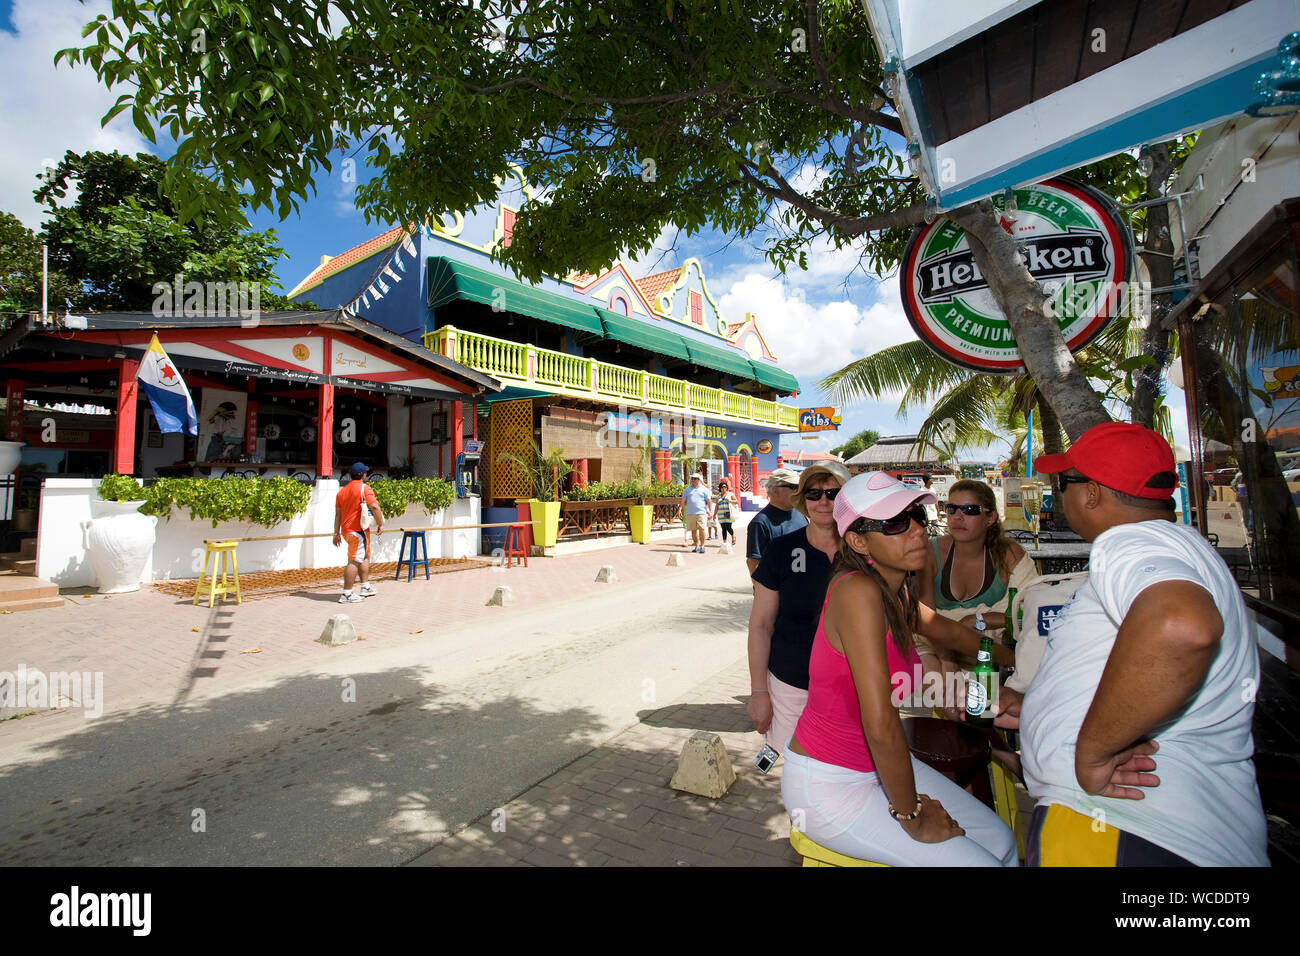 Karels Beach Bar, punto di incontro molto popolare per il sundowner, Harbor Boulevard, Kralendijk, Bonaire, Antille olandesi Foto Stock